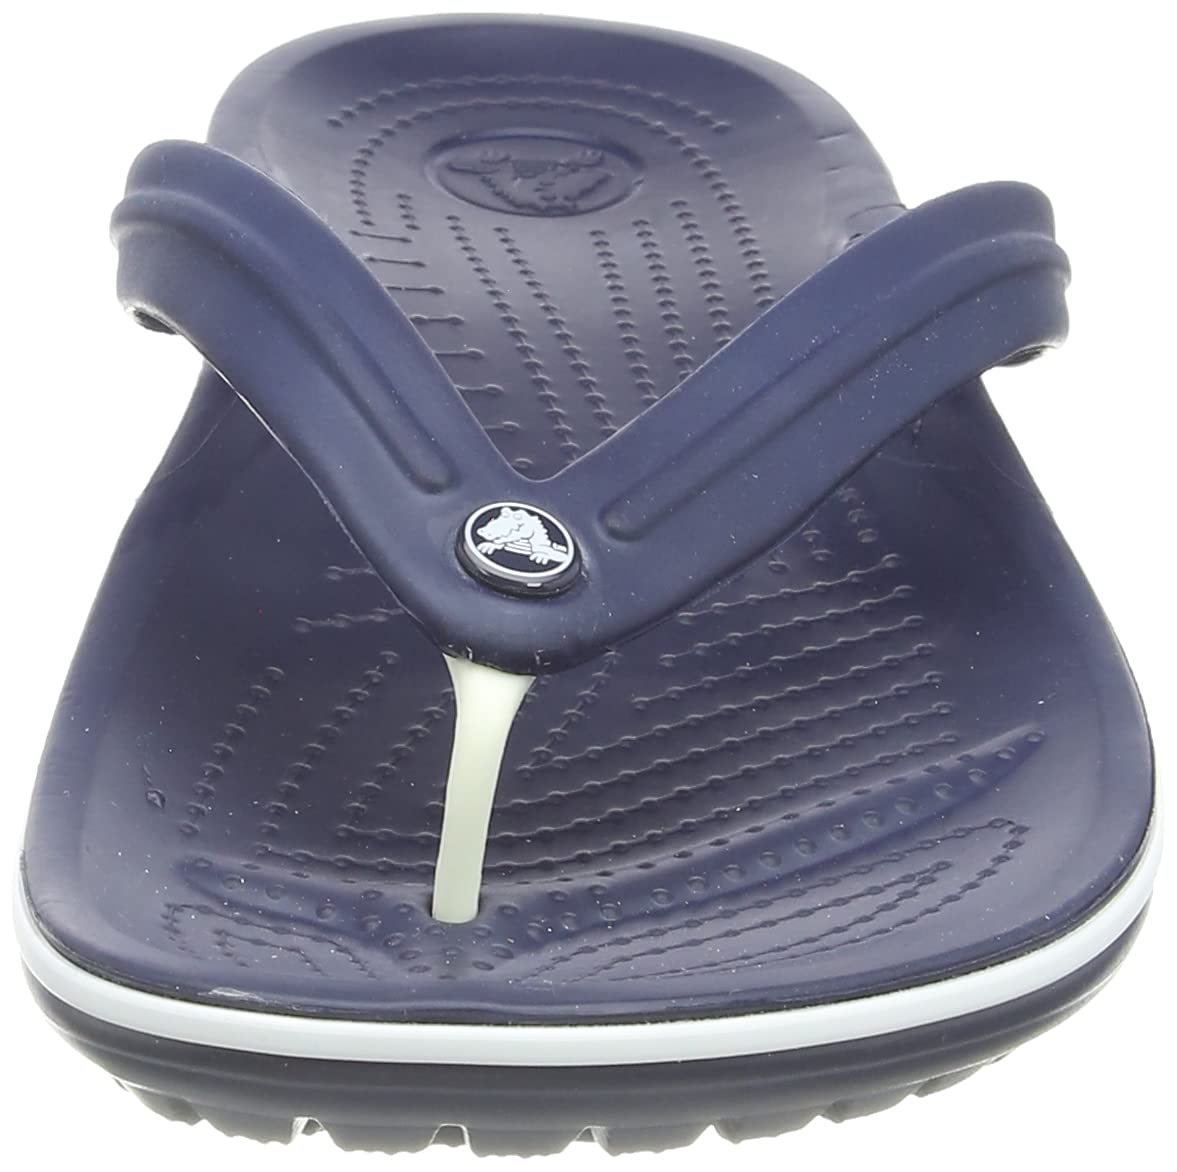 Crocs unisex-adult Crocband Flip Flop | Slip-on Sandals | Shower Shoes